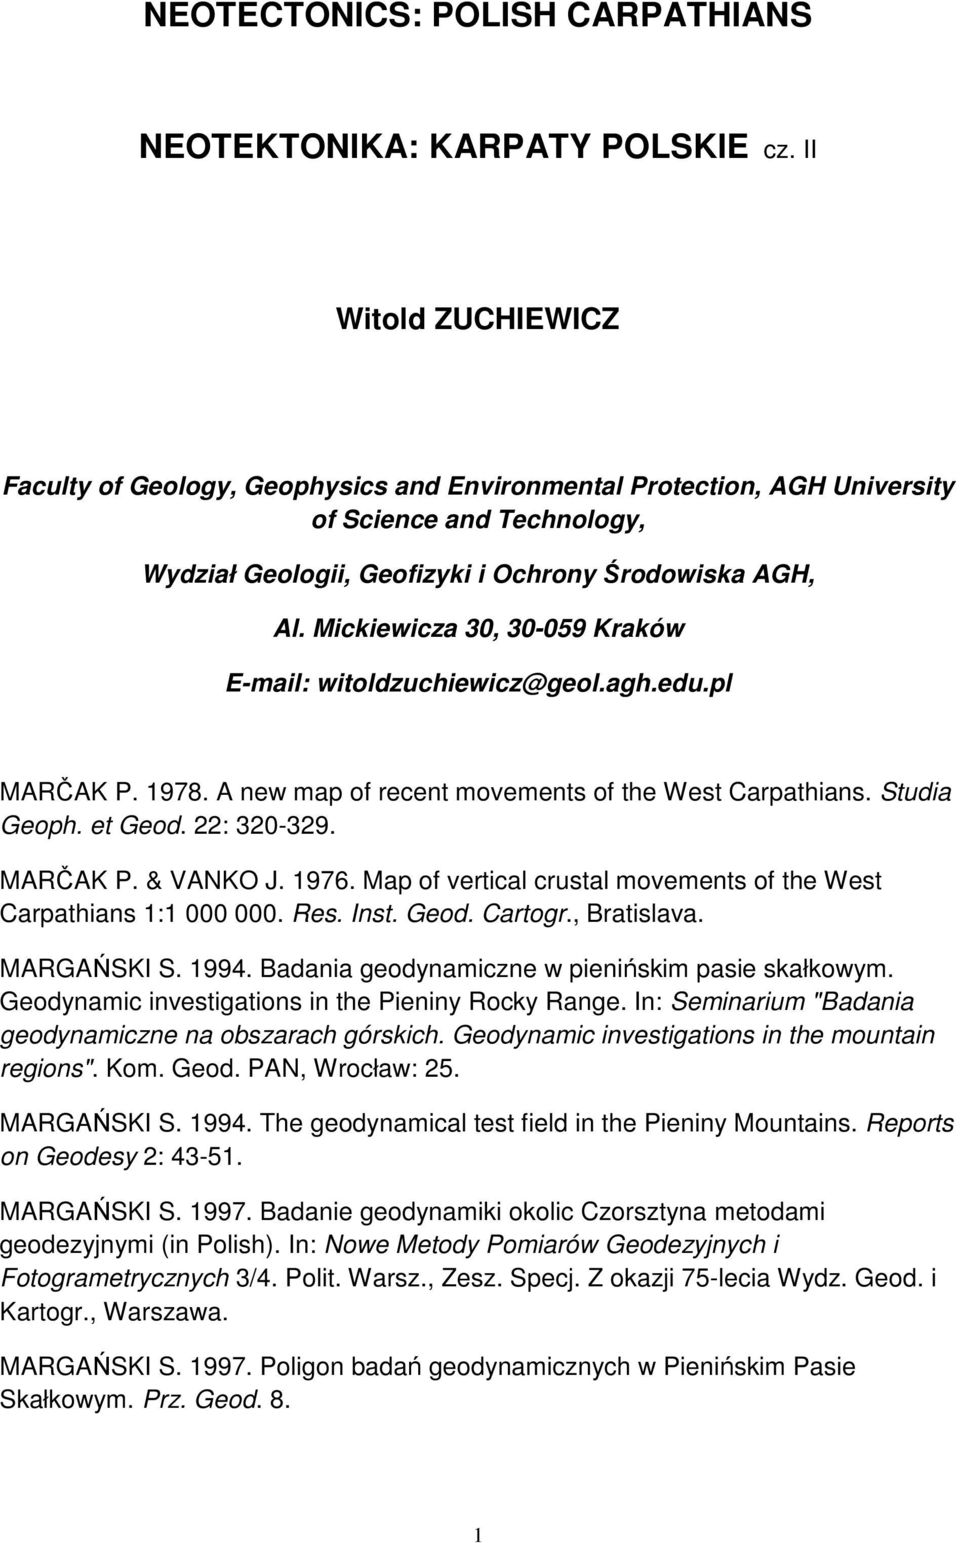 Mickiewicza 30, 30-059 Kraków E-mail: witoldzuchiewicz@geol.agh.edu.pl MARČAK P. 1978. A new map of recent movements of the West Carpathians. Studia Geoph. et Geod. 22: 320-329. MARČAK P. & VANKO J.